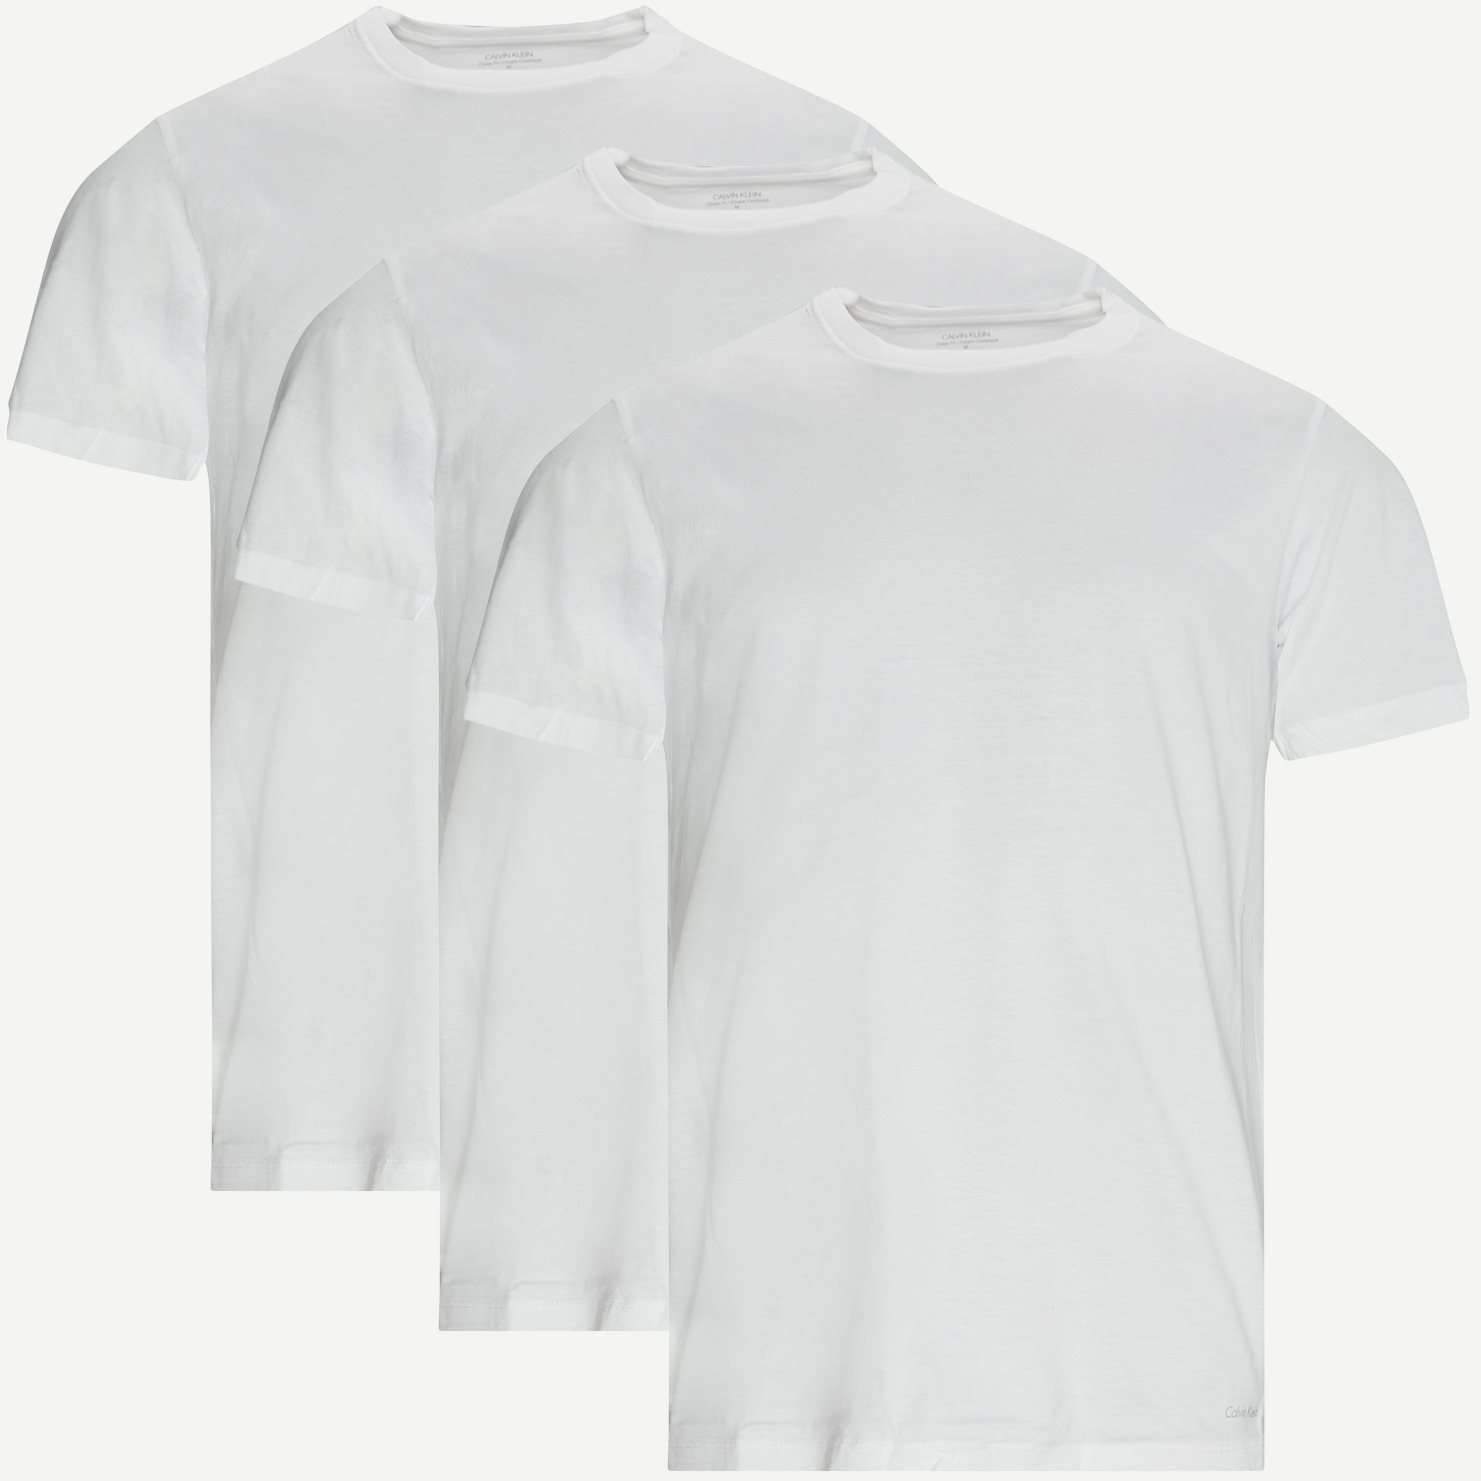 3-Pack Crewneck T-Shirts - T-shirts - Classic fit - White